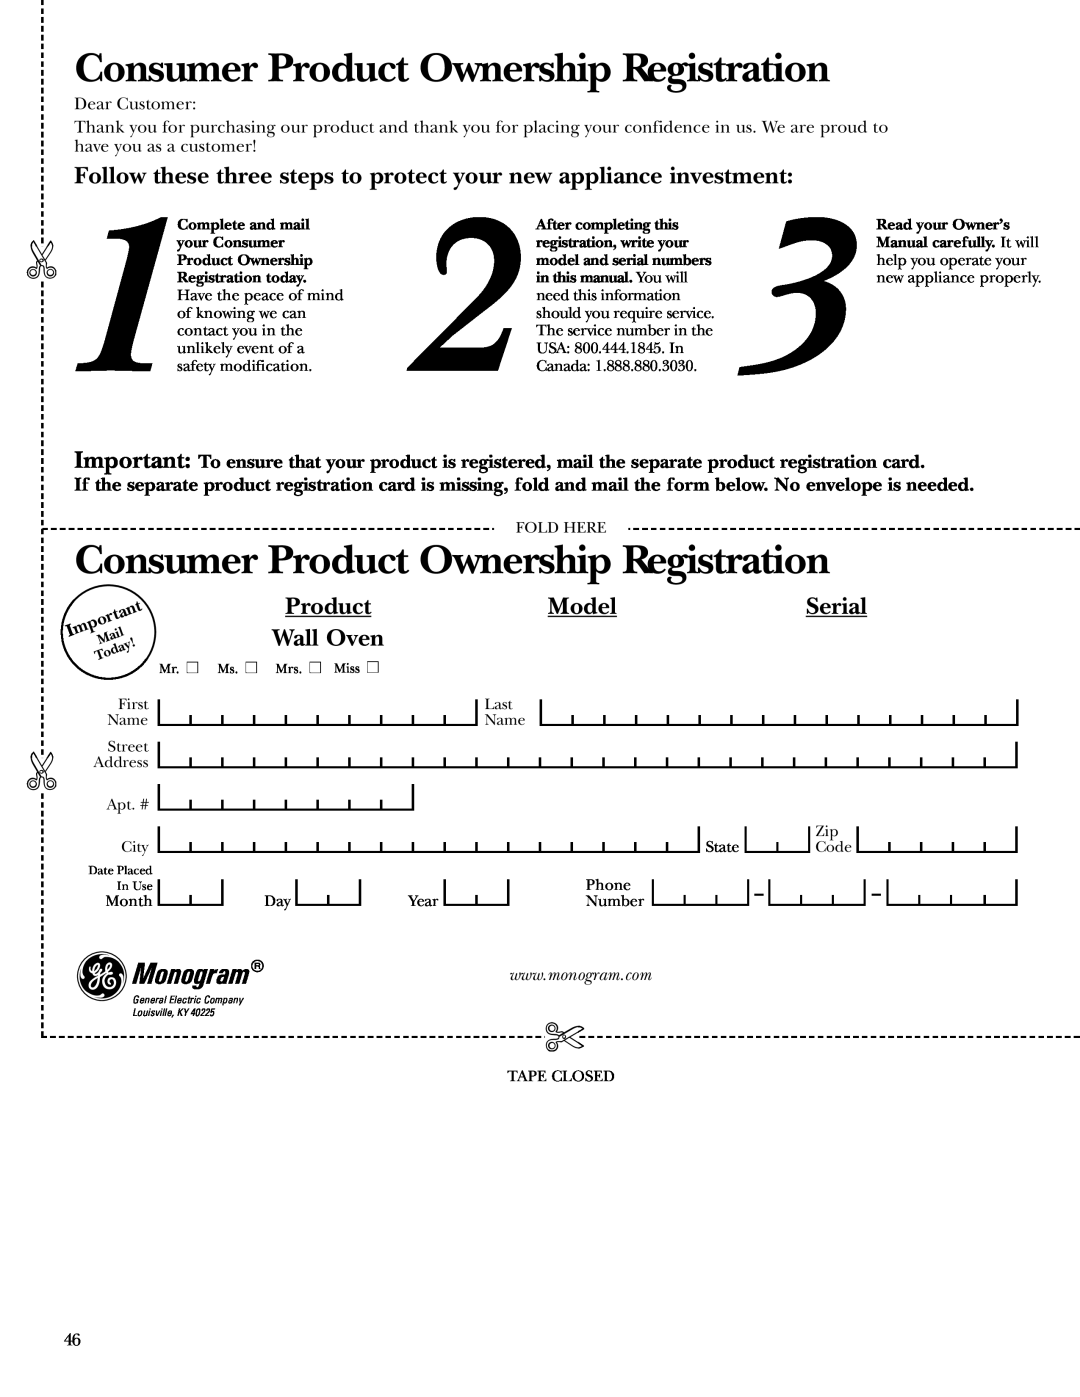 GE ZET3038, ZET3058 owner manual Consumer Product Ownership Registration, Monogram, Model, Wall Oven, Serial 